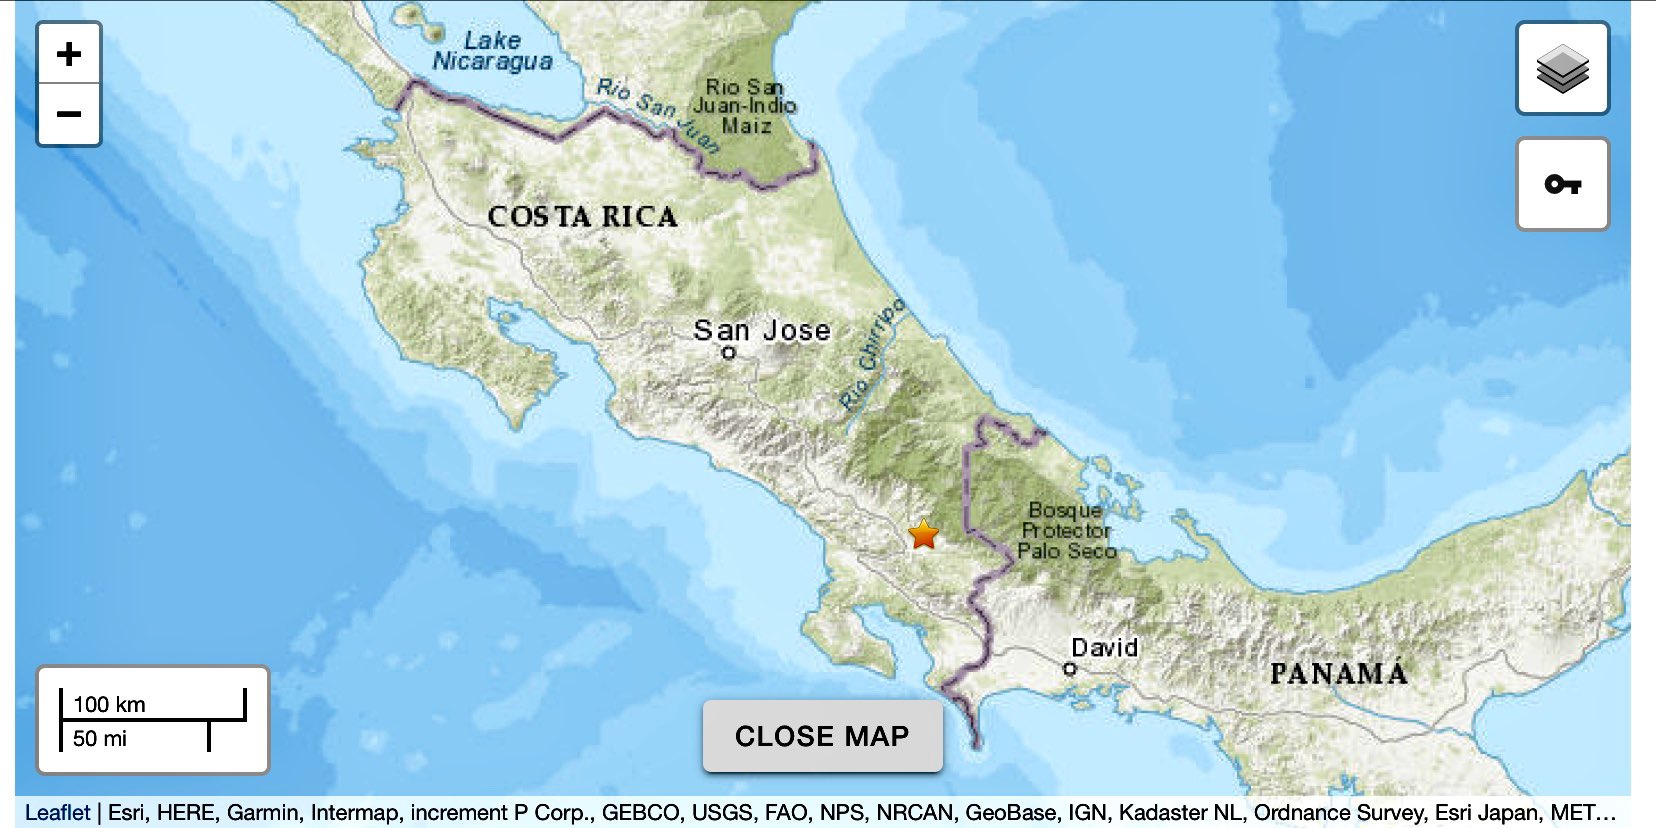 Intenso sismo de magnitud 5,8 se registró en Costa Rica